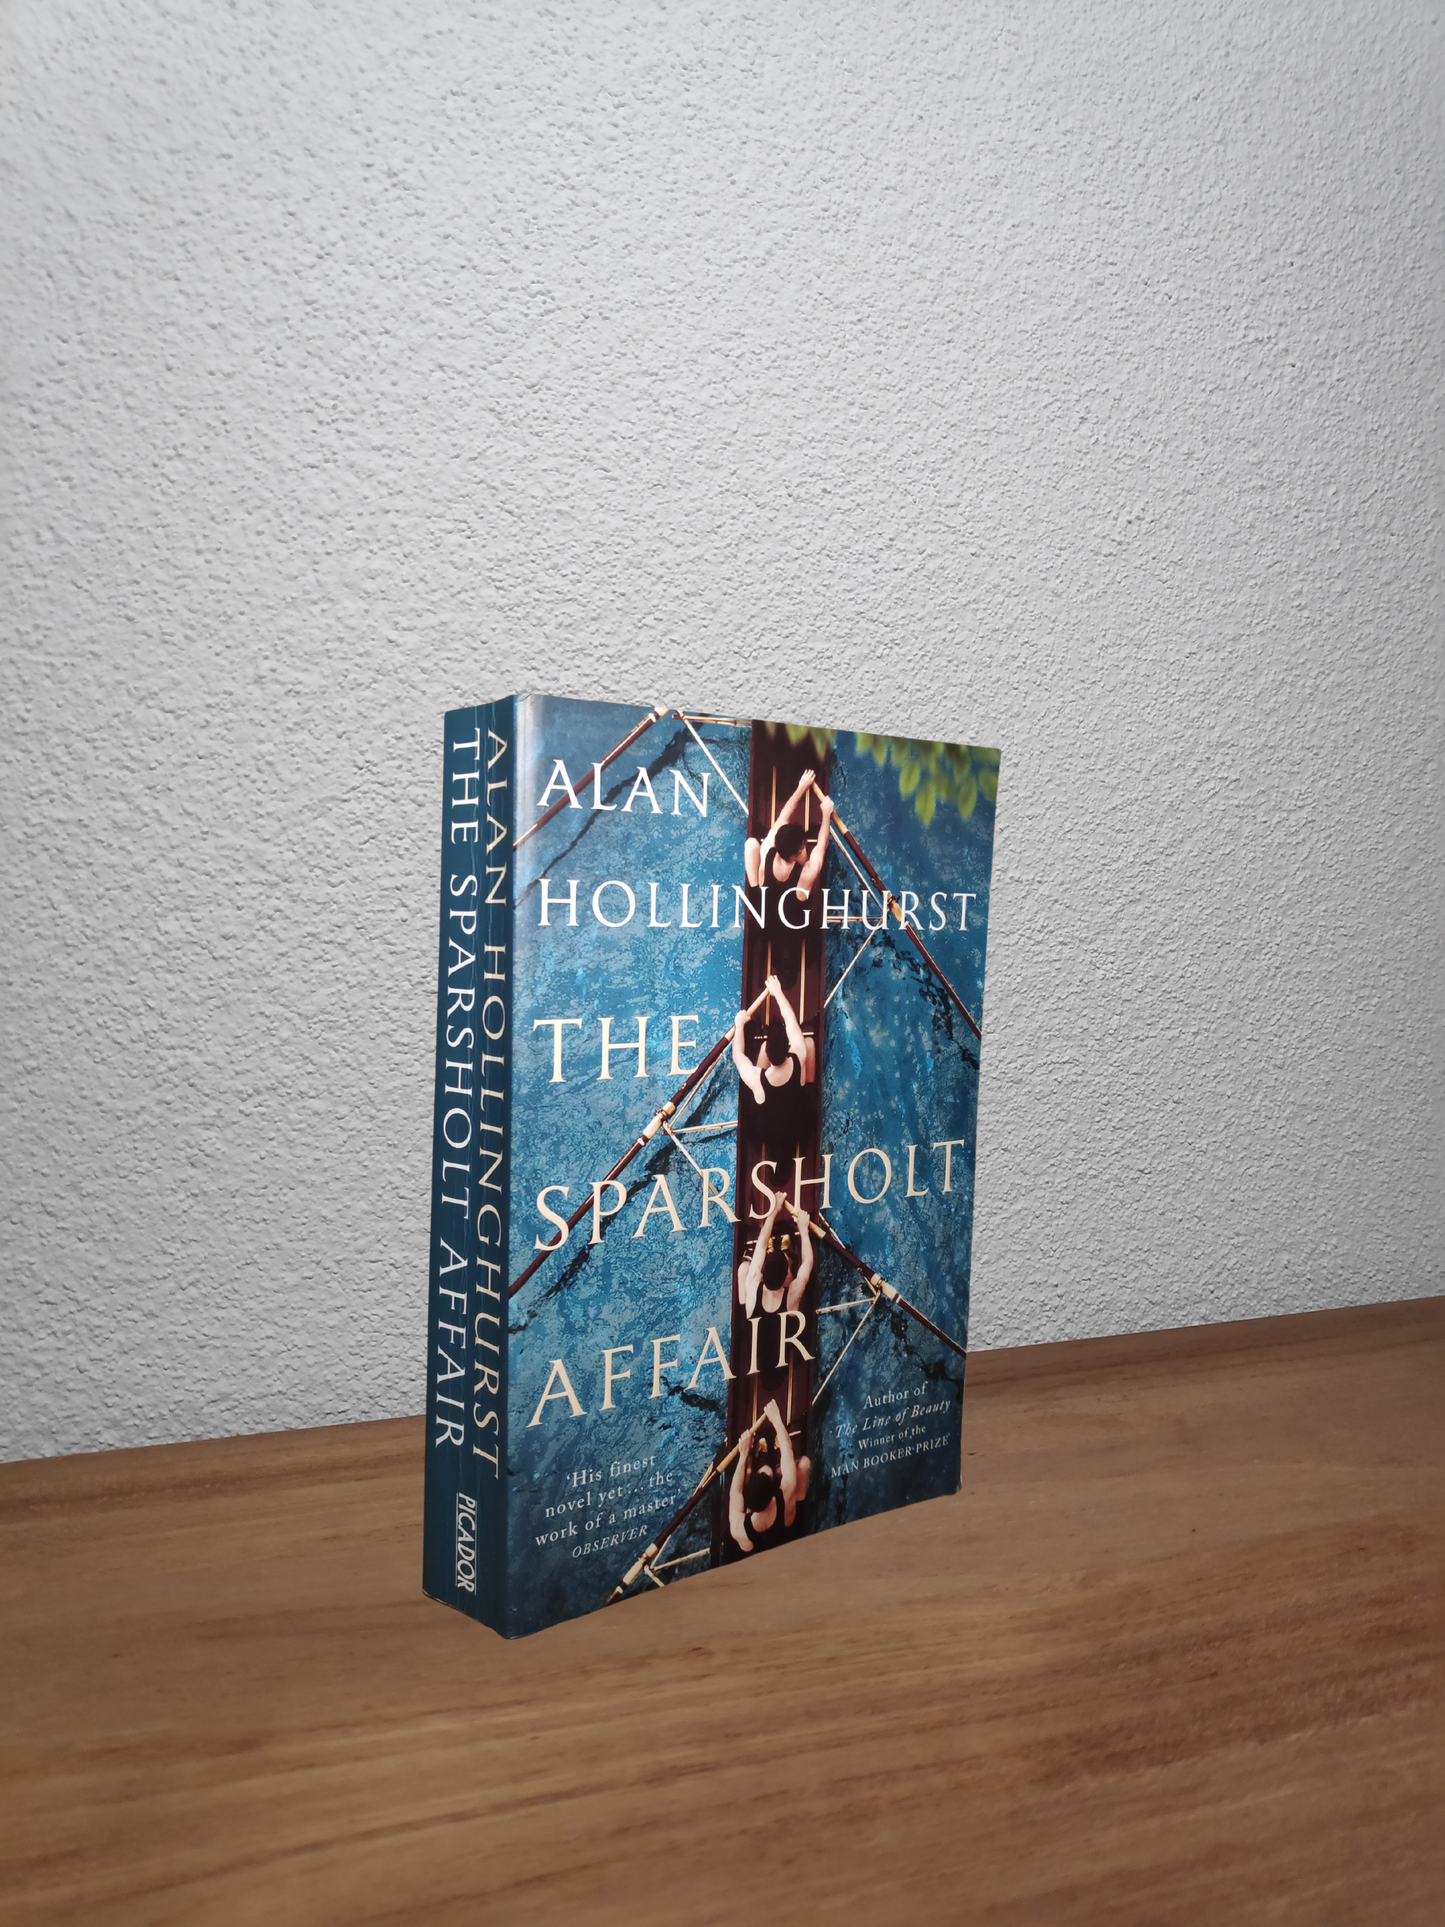  Alan Hollinghurst - The Sparsholt Affair  - Second-hand english book to deliver in Zurich & Switzerland